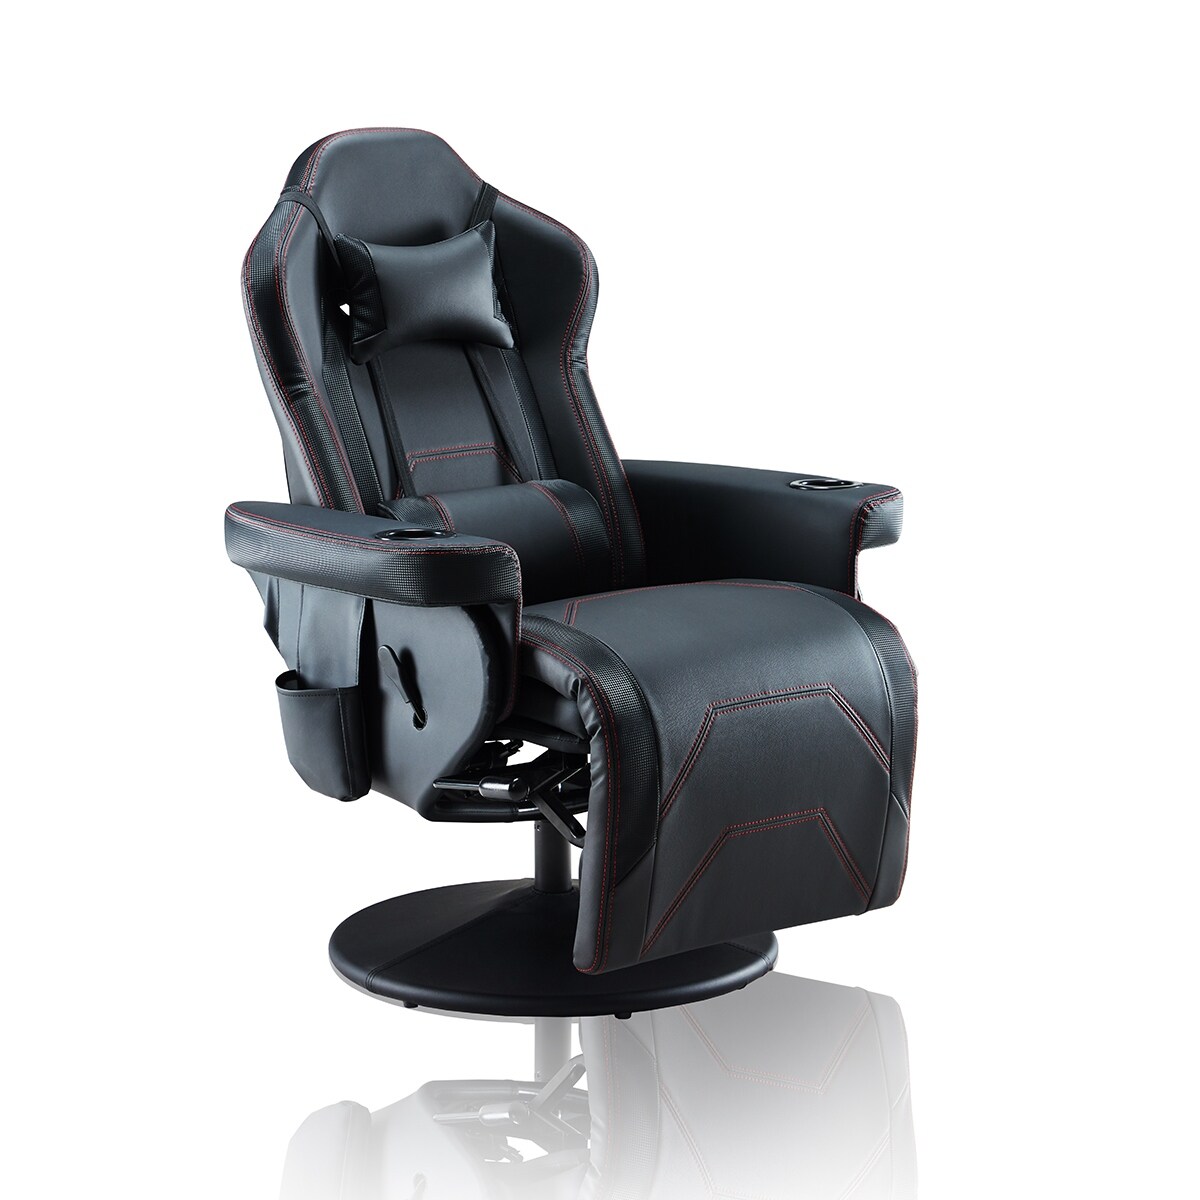 Okeysen Gaming Chair, Massage Lumbar Support and Upgraded headrest